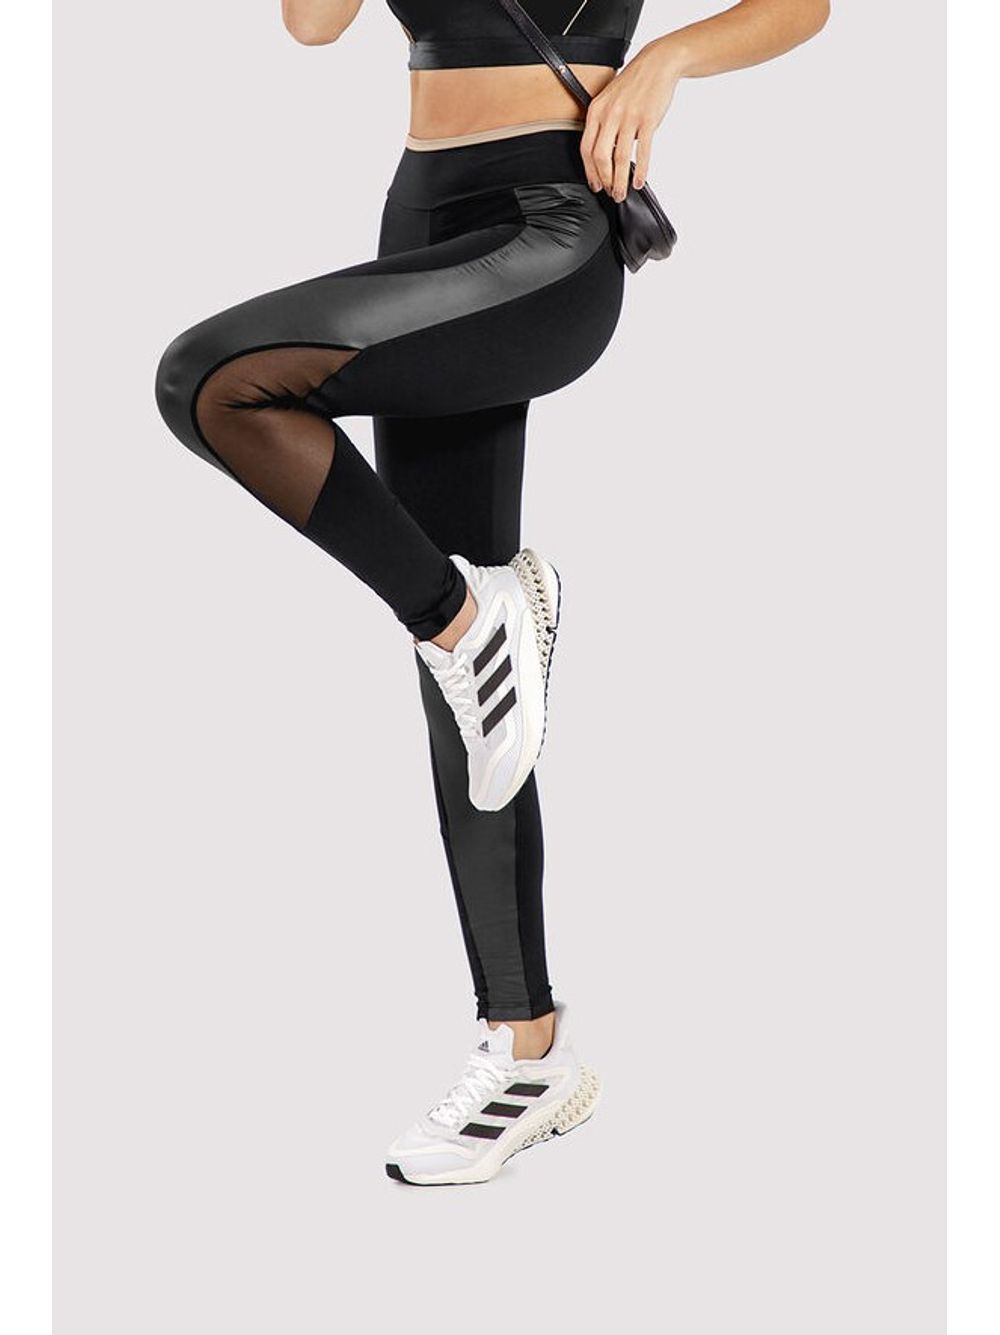 Legging adidas Performance RS Laranja - Compre Agora